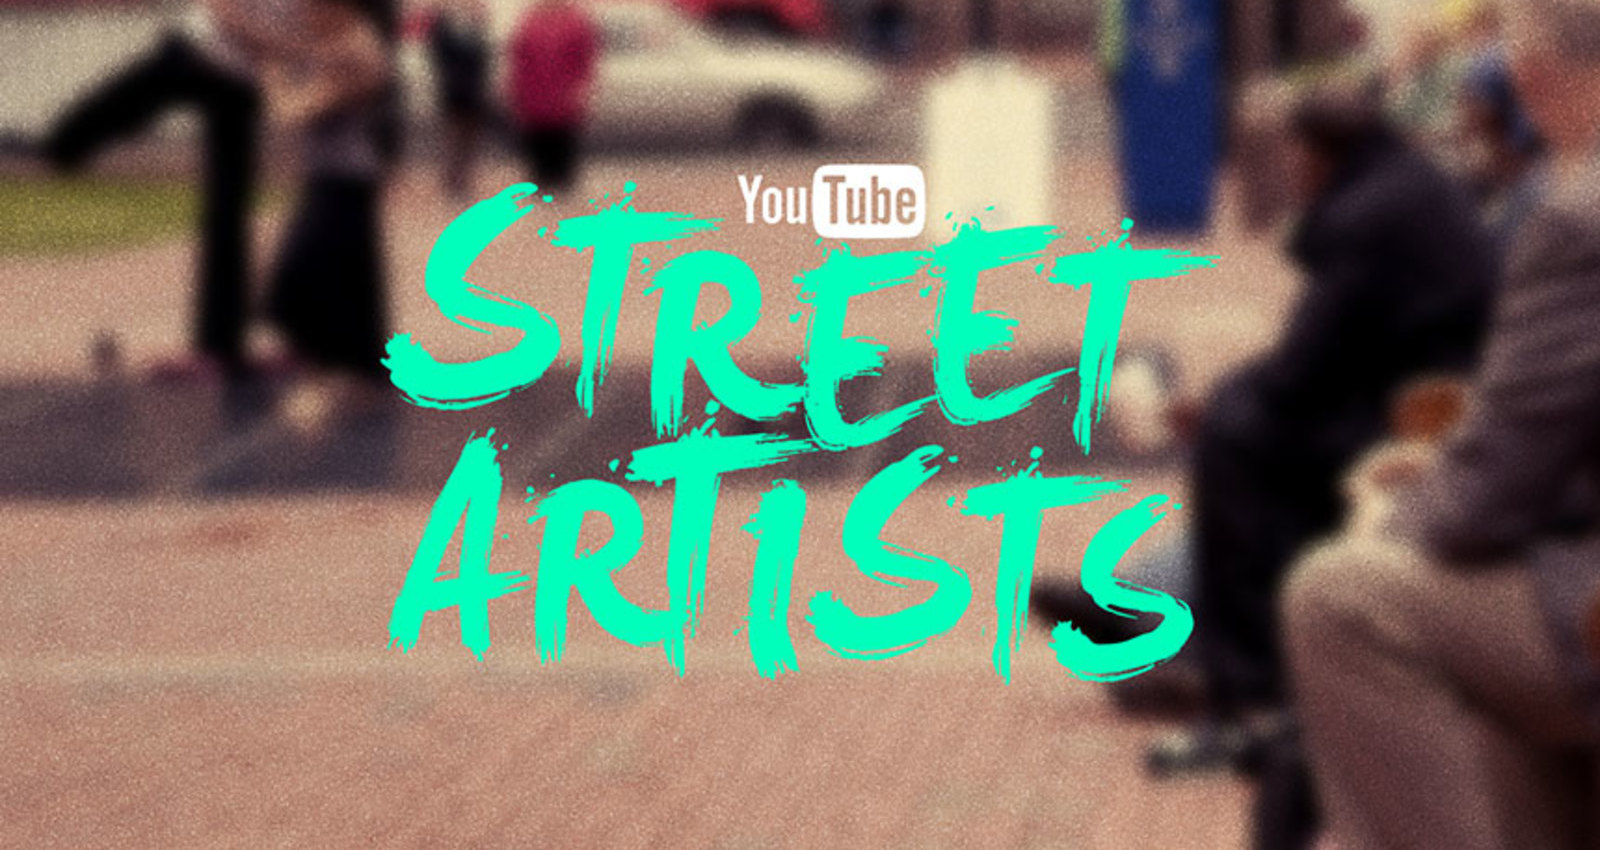 YouTube Street Artists